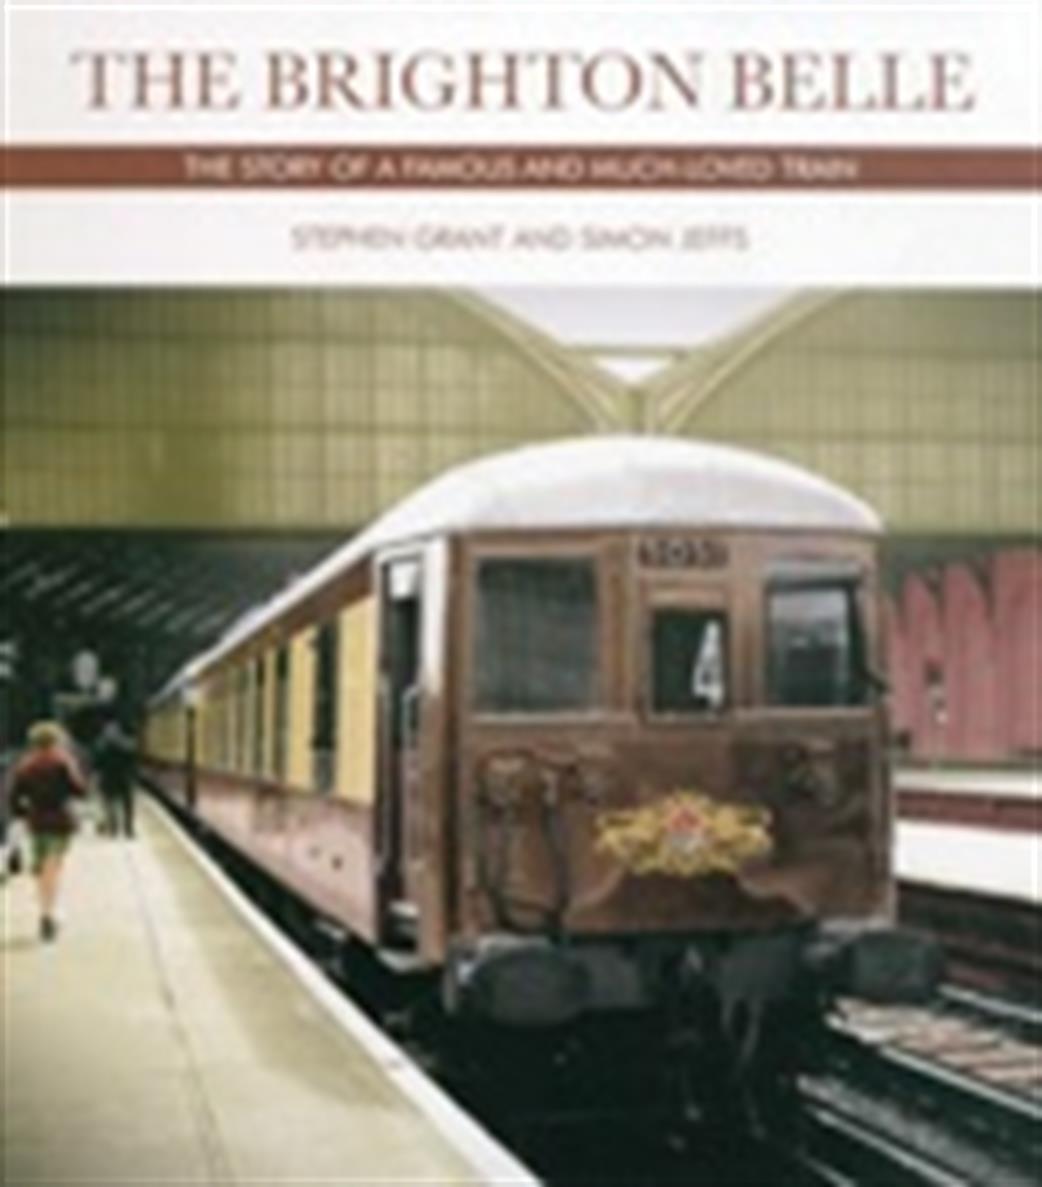 Capital Transport Publishing 9781854143624 Brighton Belle by Stephen Grant & Simon Jeffs